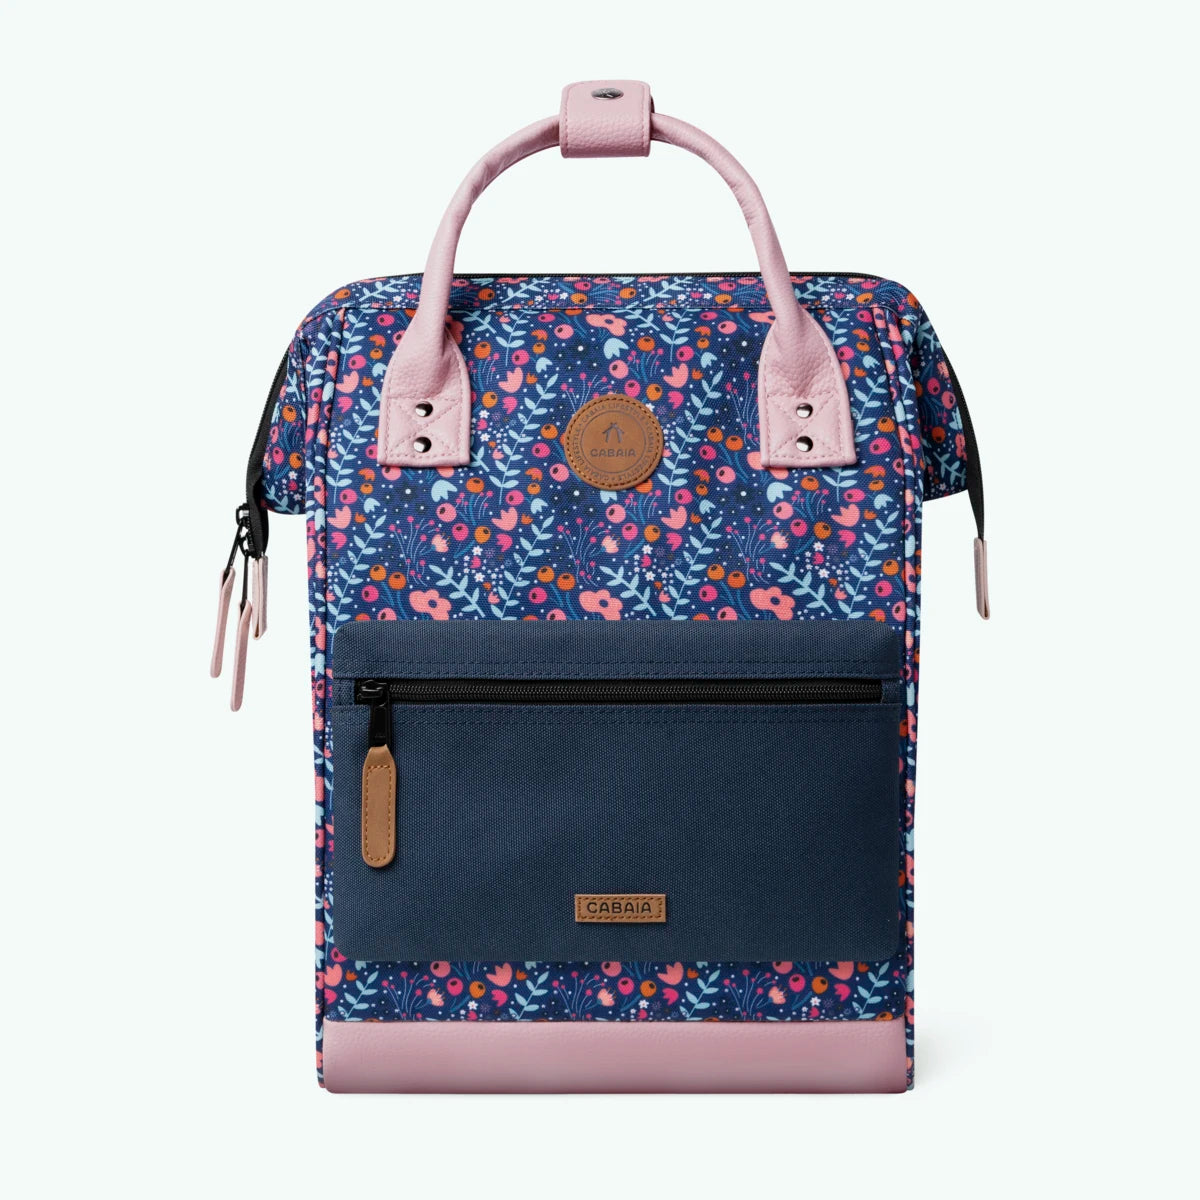 adventurer-light-pink-medium-backpack-1-pocket